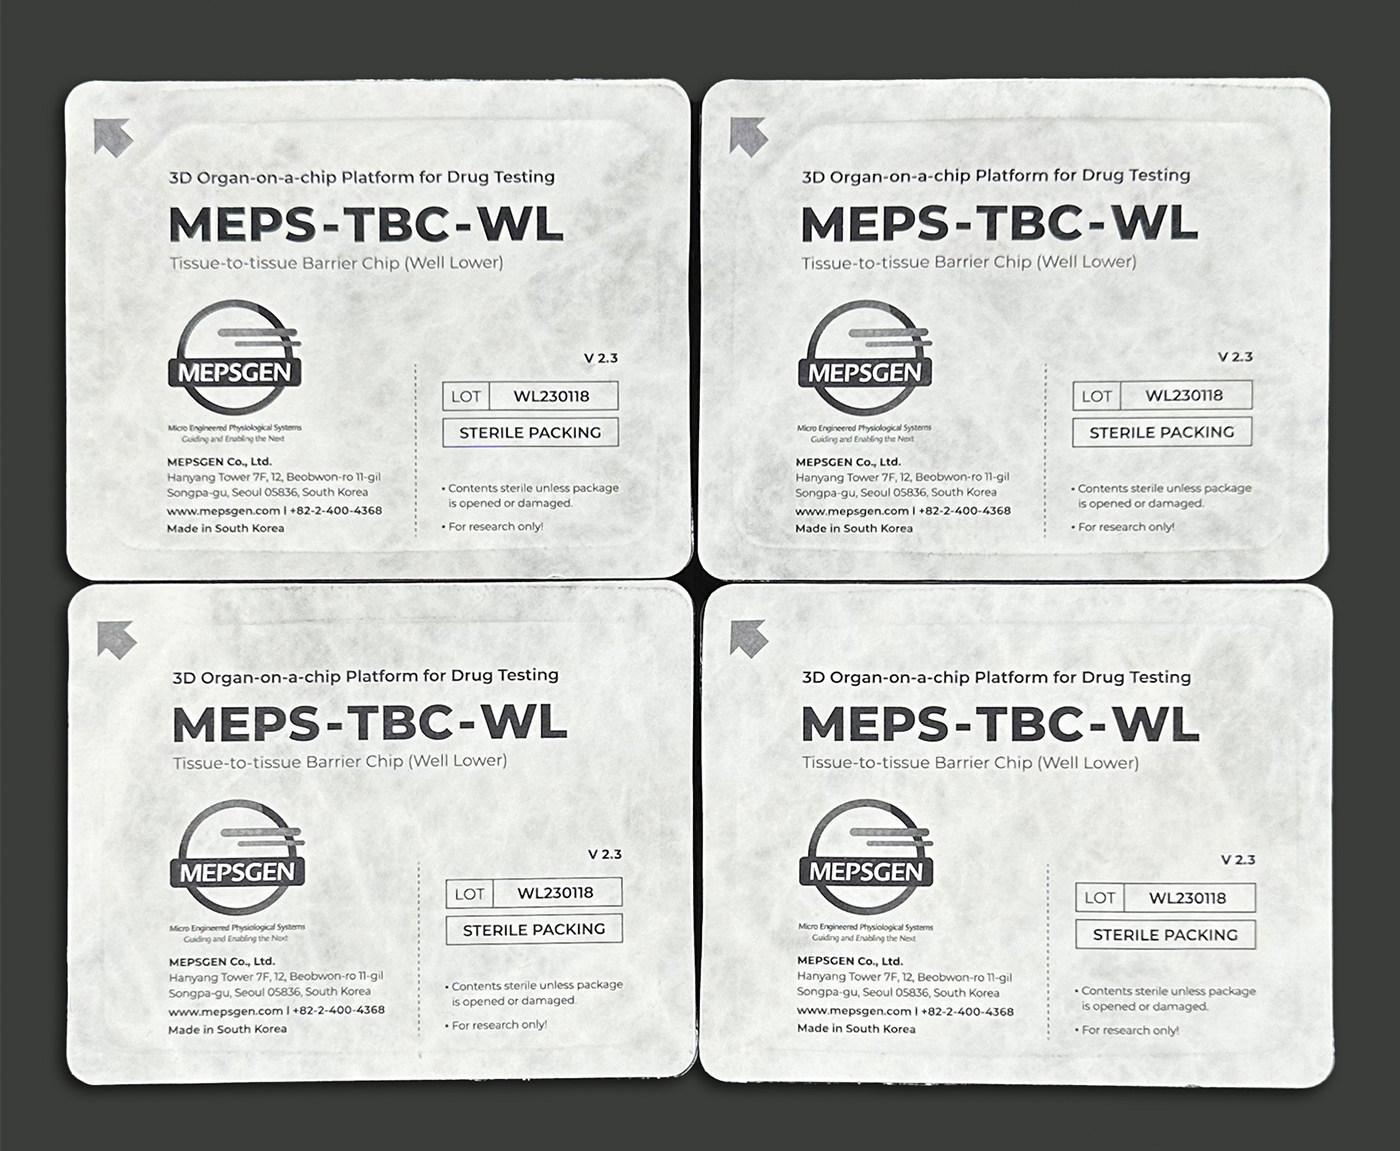 Label of the MESPGEN TBC-WL platforms